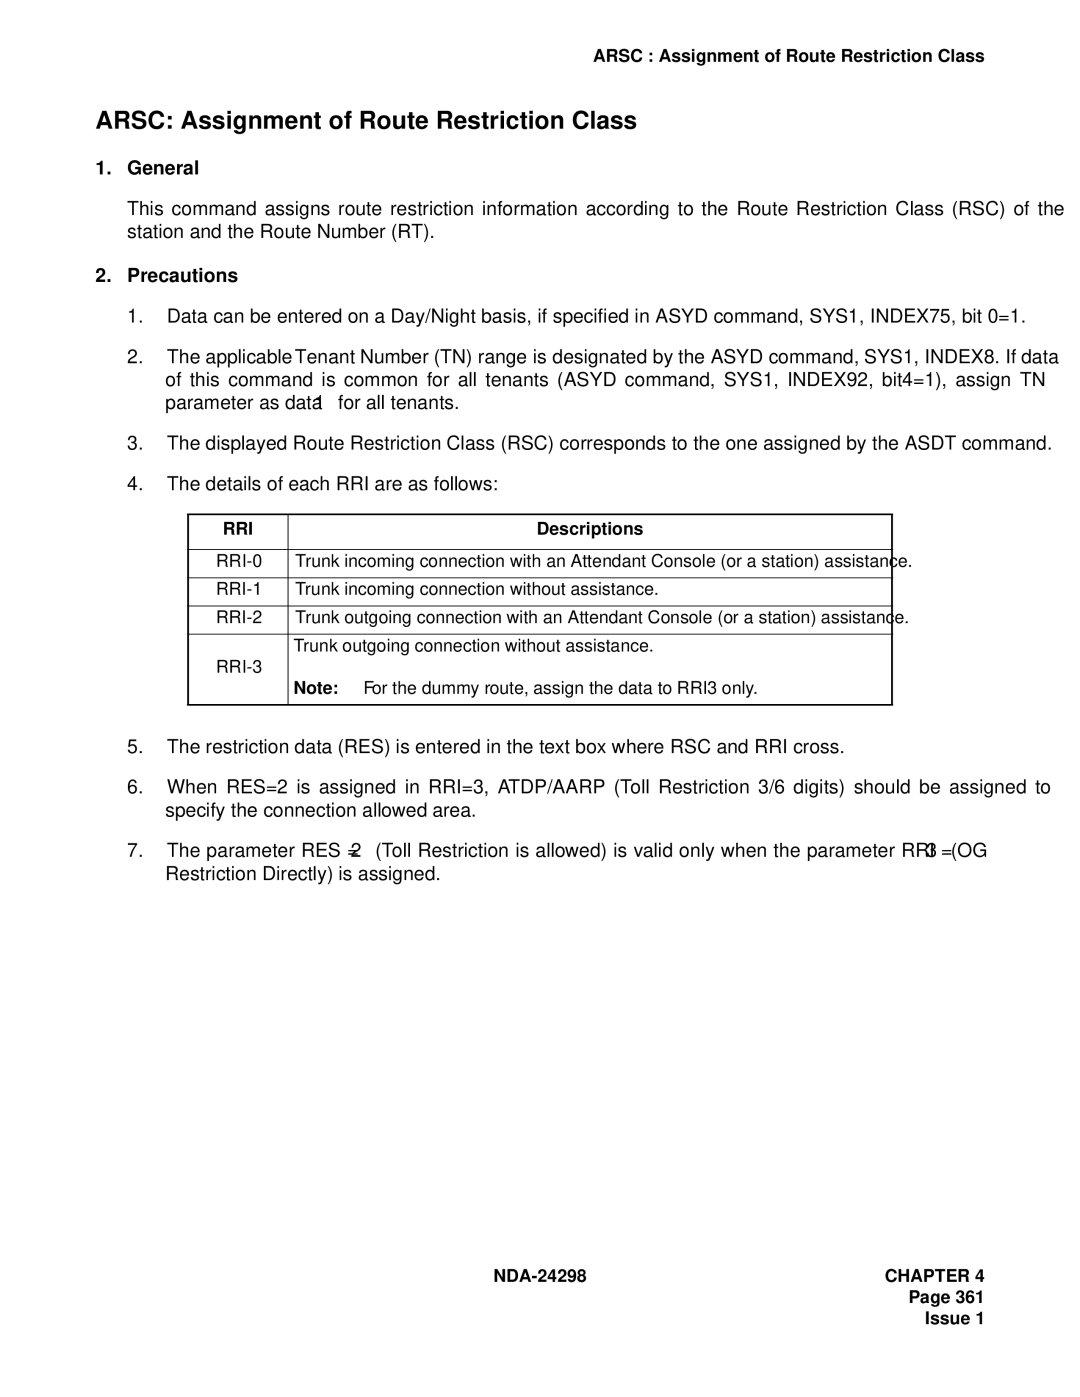 NEC NDA-24298 manual Arsc Assignment of Route Restriction Class, Rri, Descriptions 